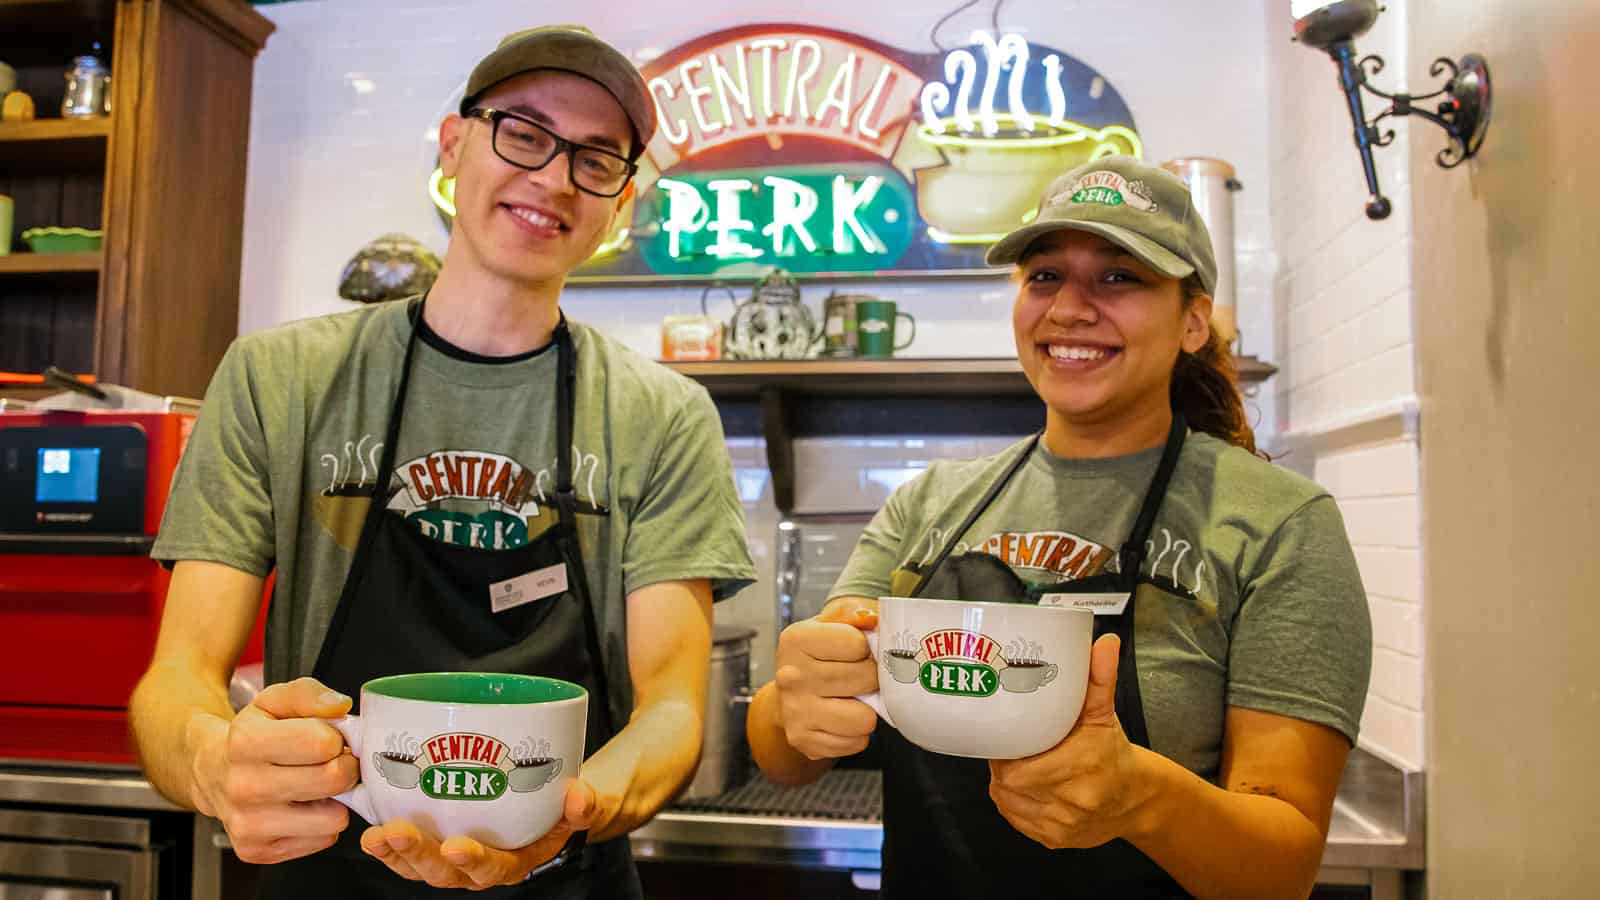 Central Perk Café Staff